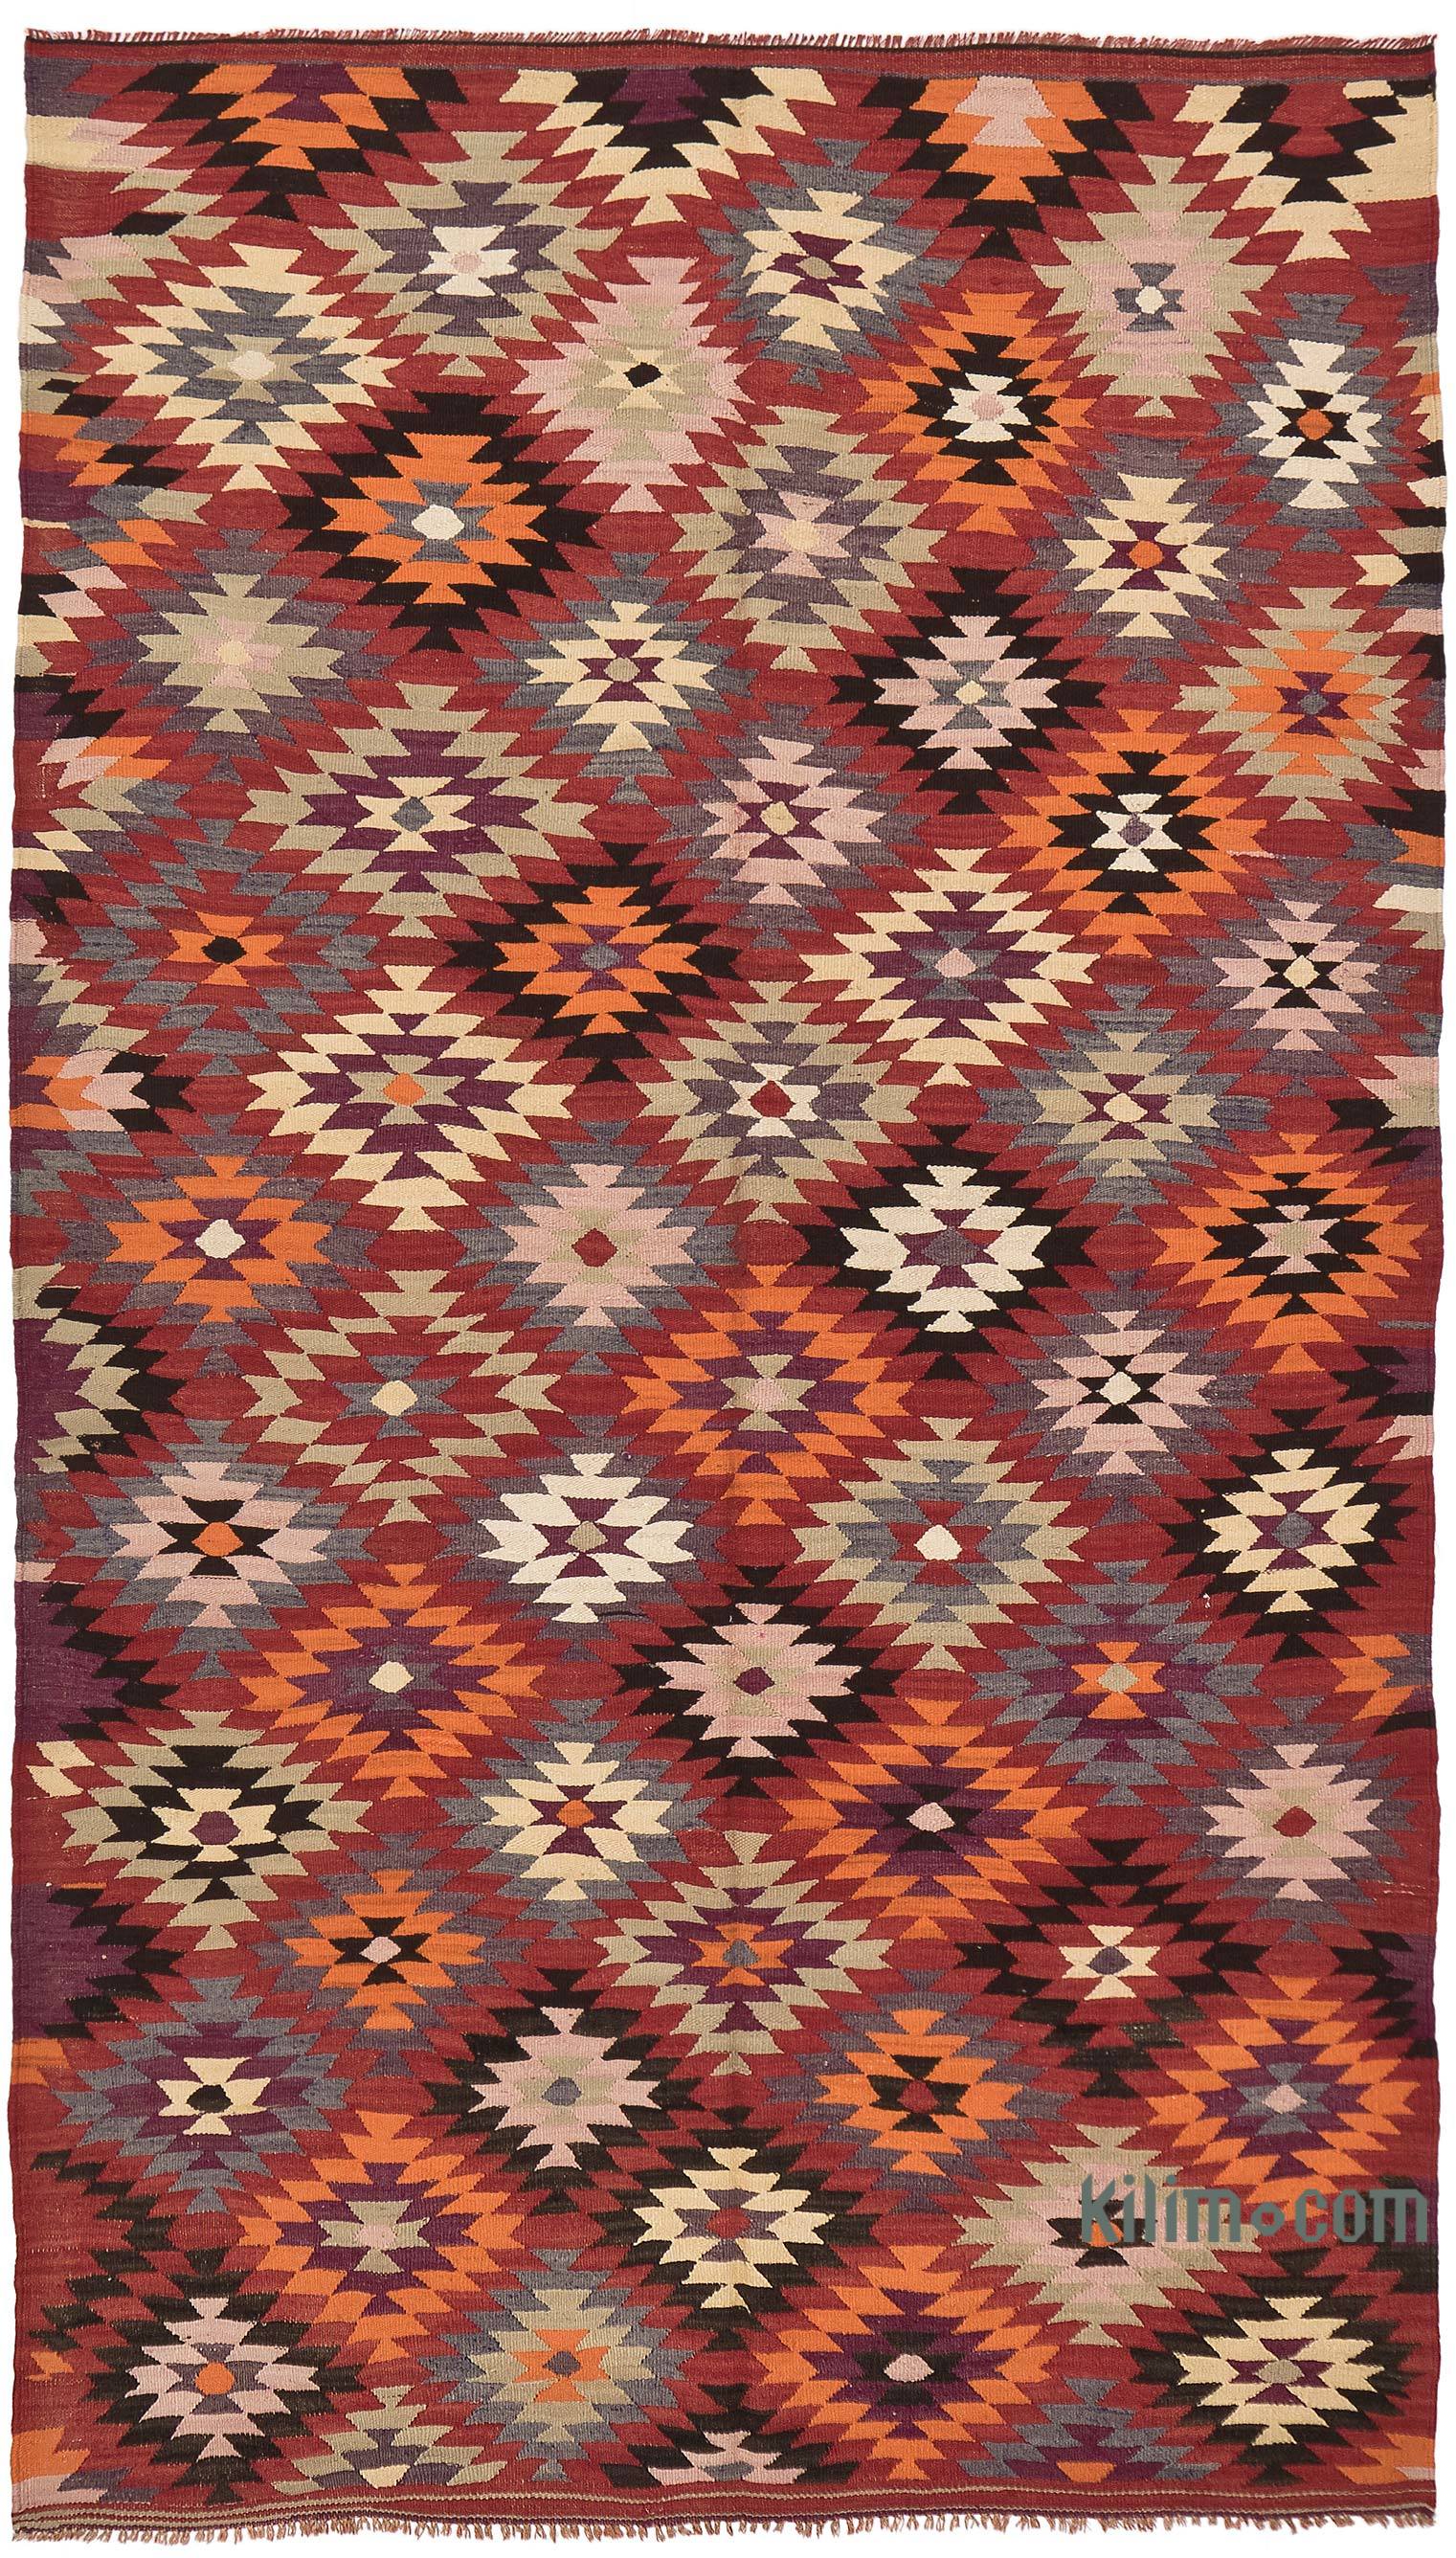 Tribal pattern - 61 photo